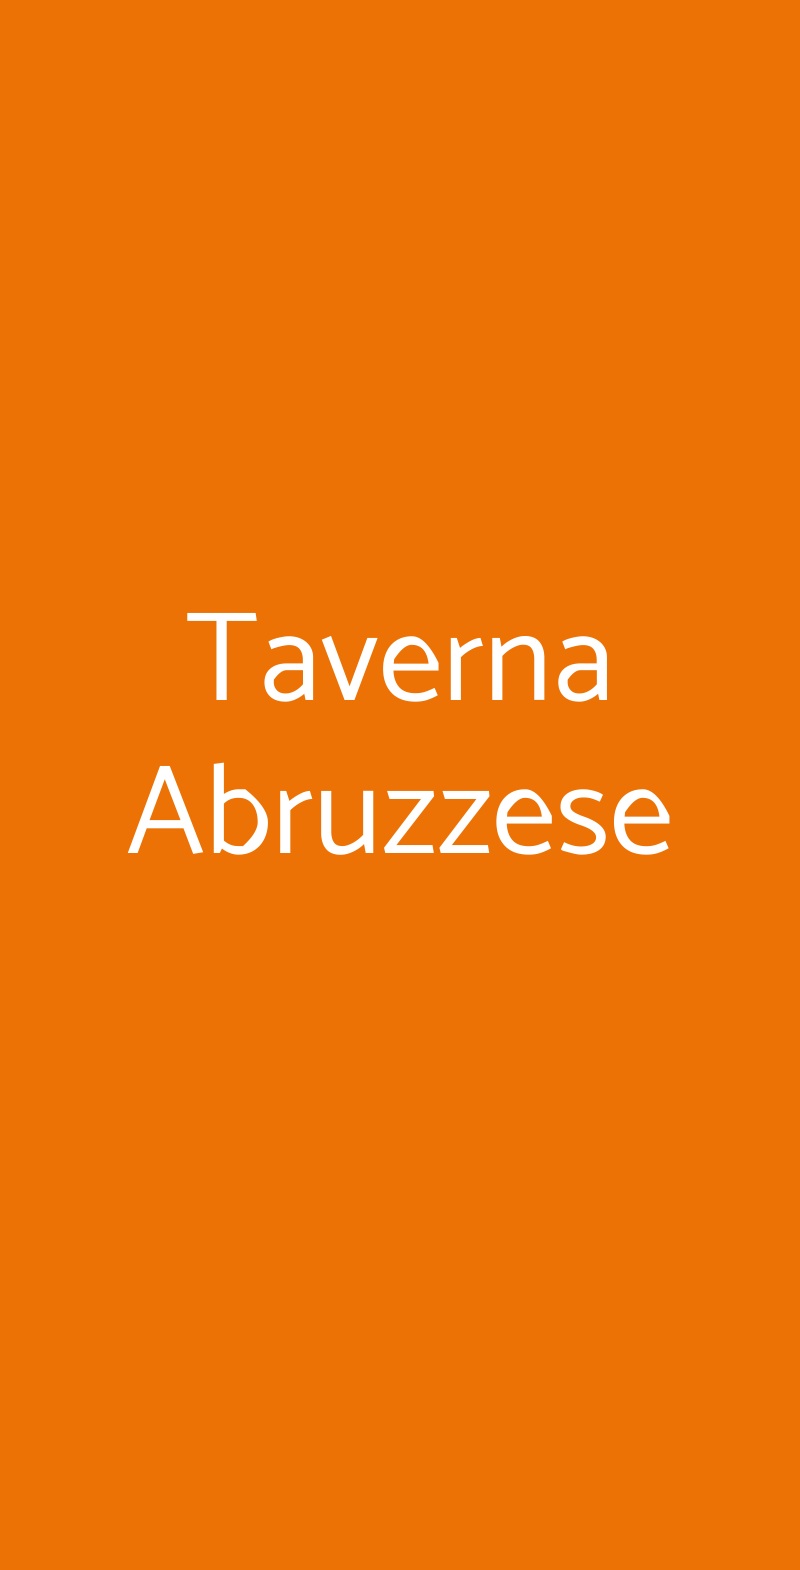 Taverna Abruzzese Roma menù 1 pagina